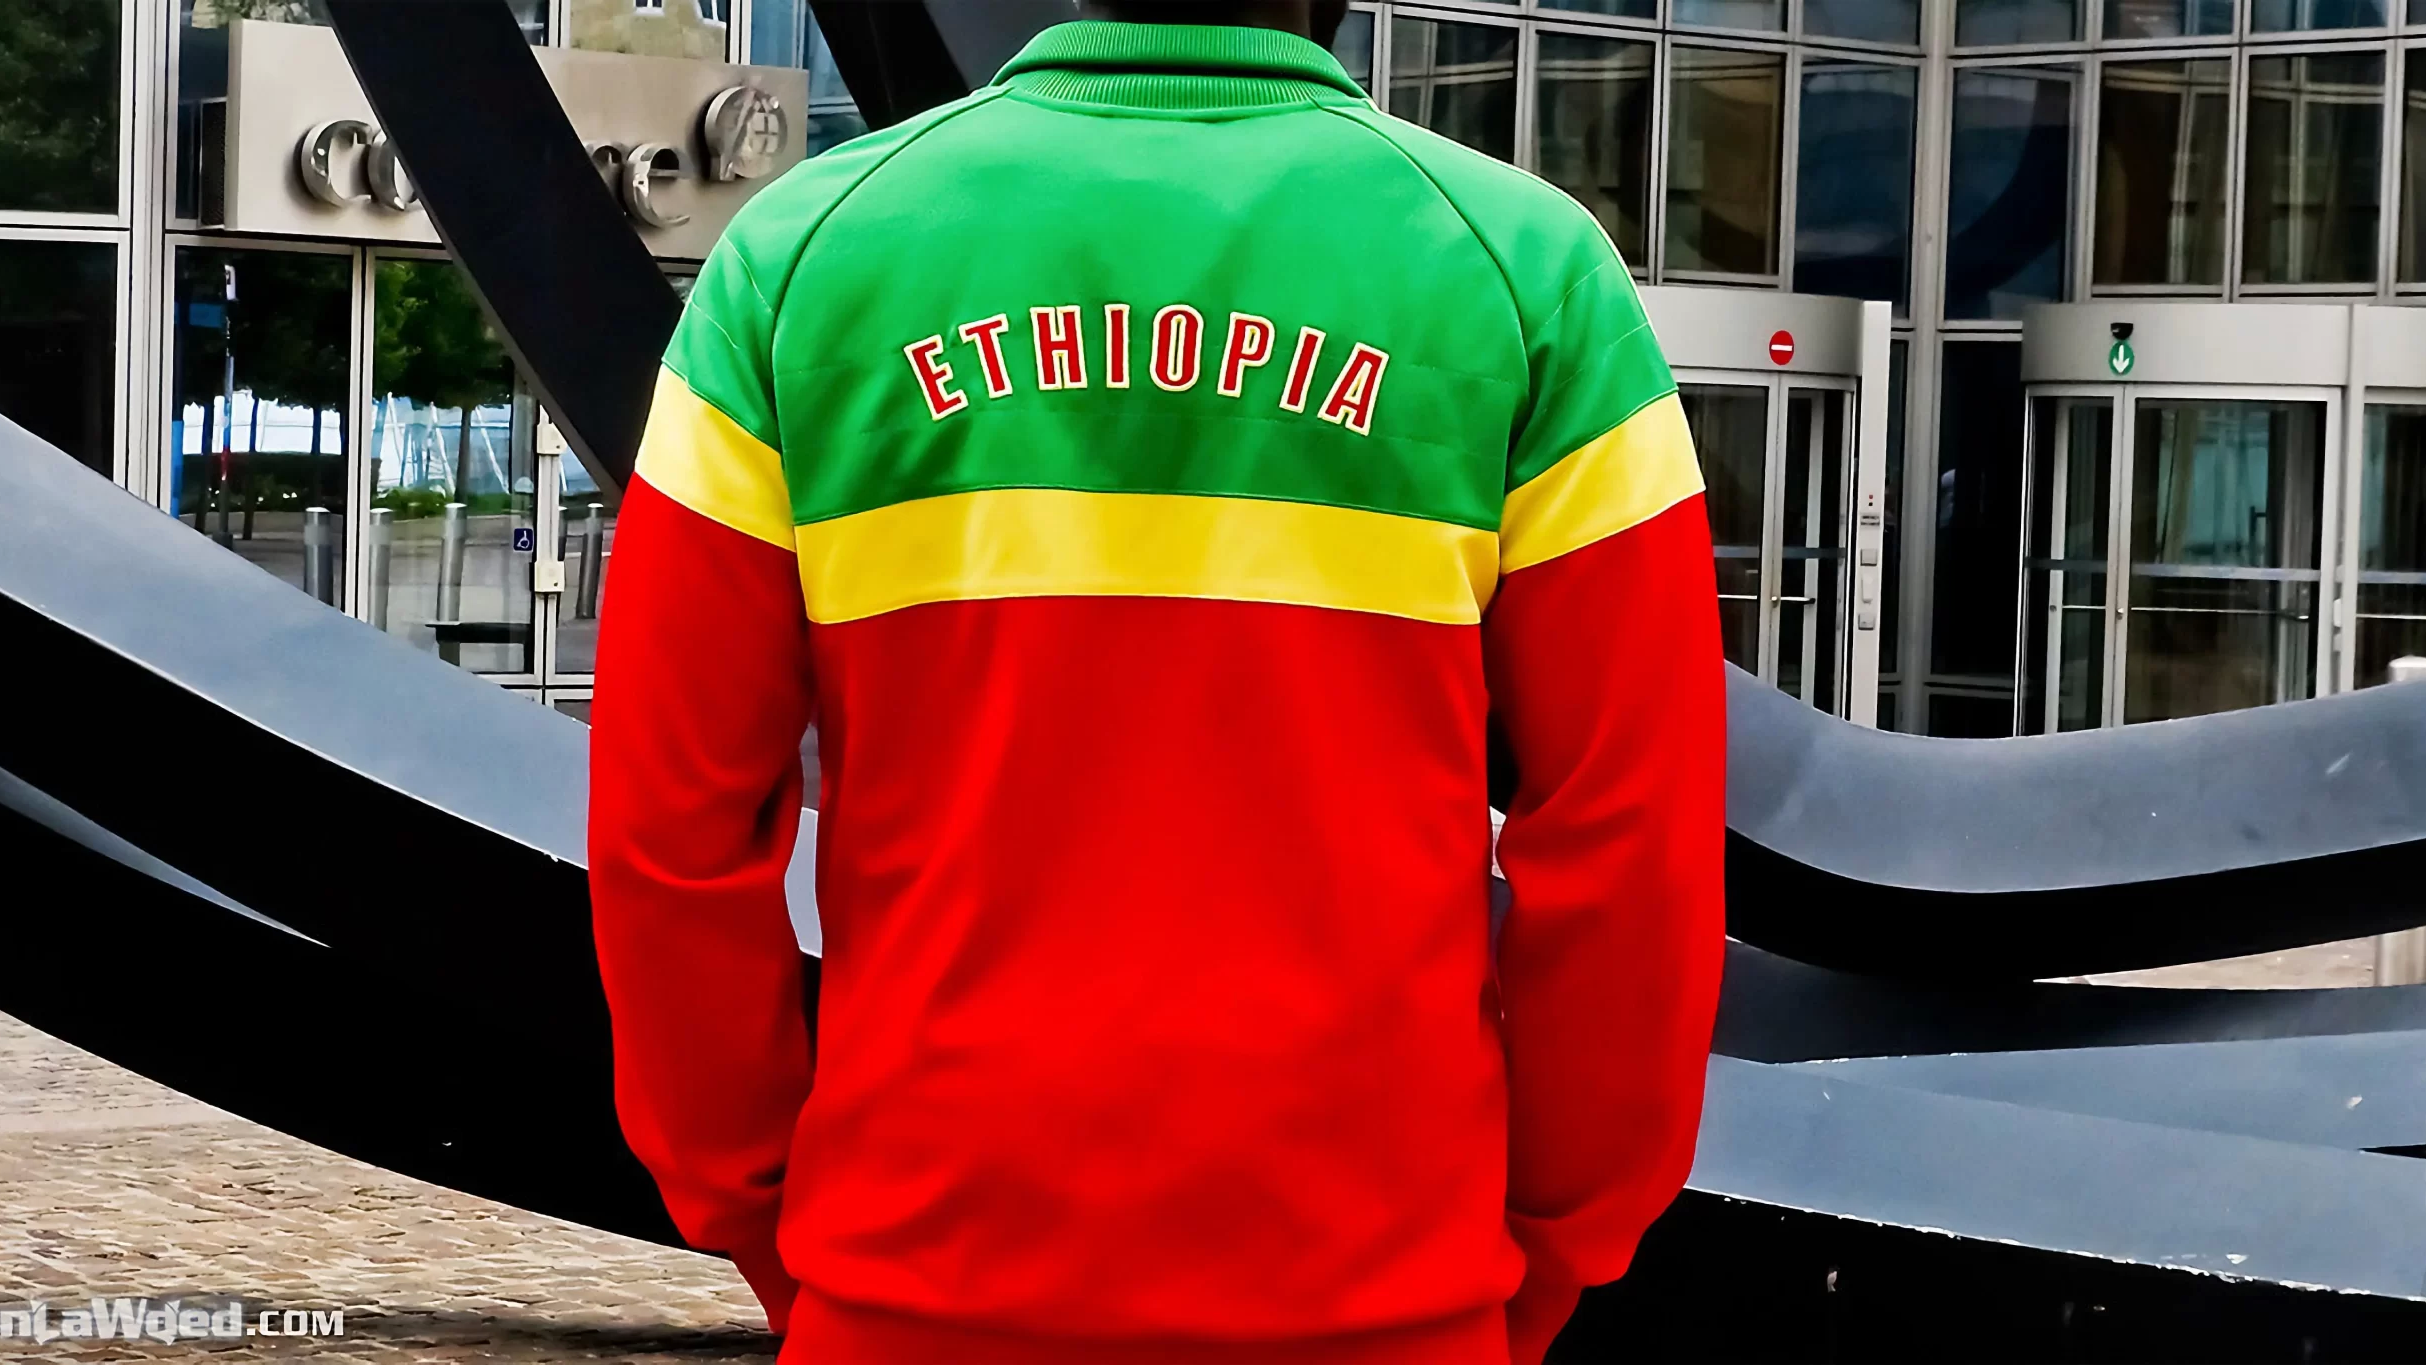 Men's 2008 Ethiopia Track Top by Adidas Originals: Masterclass (EnLawded.com file #lmchk89705ip2y121462kg9st)